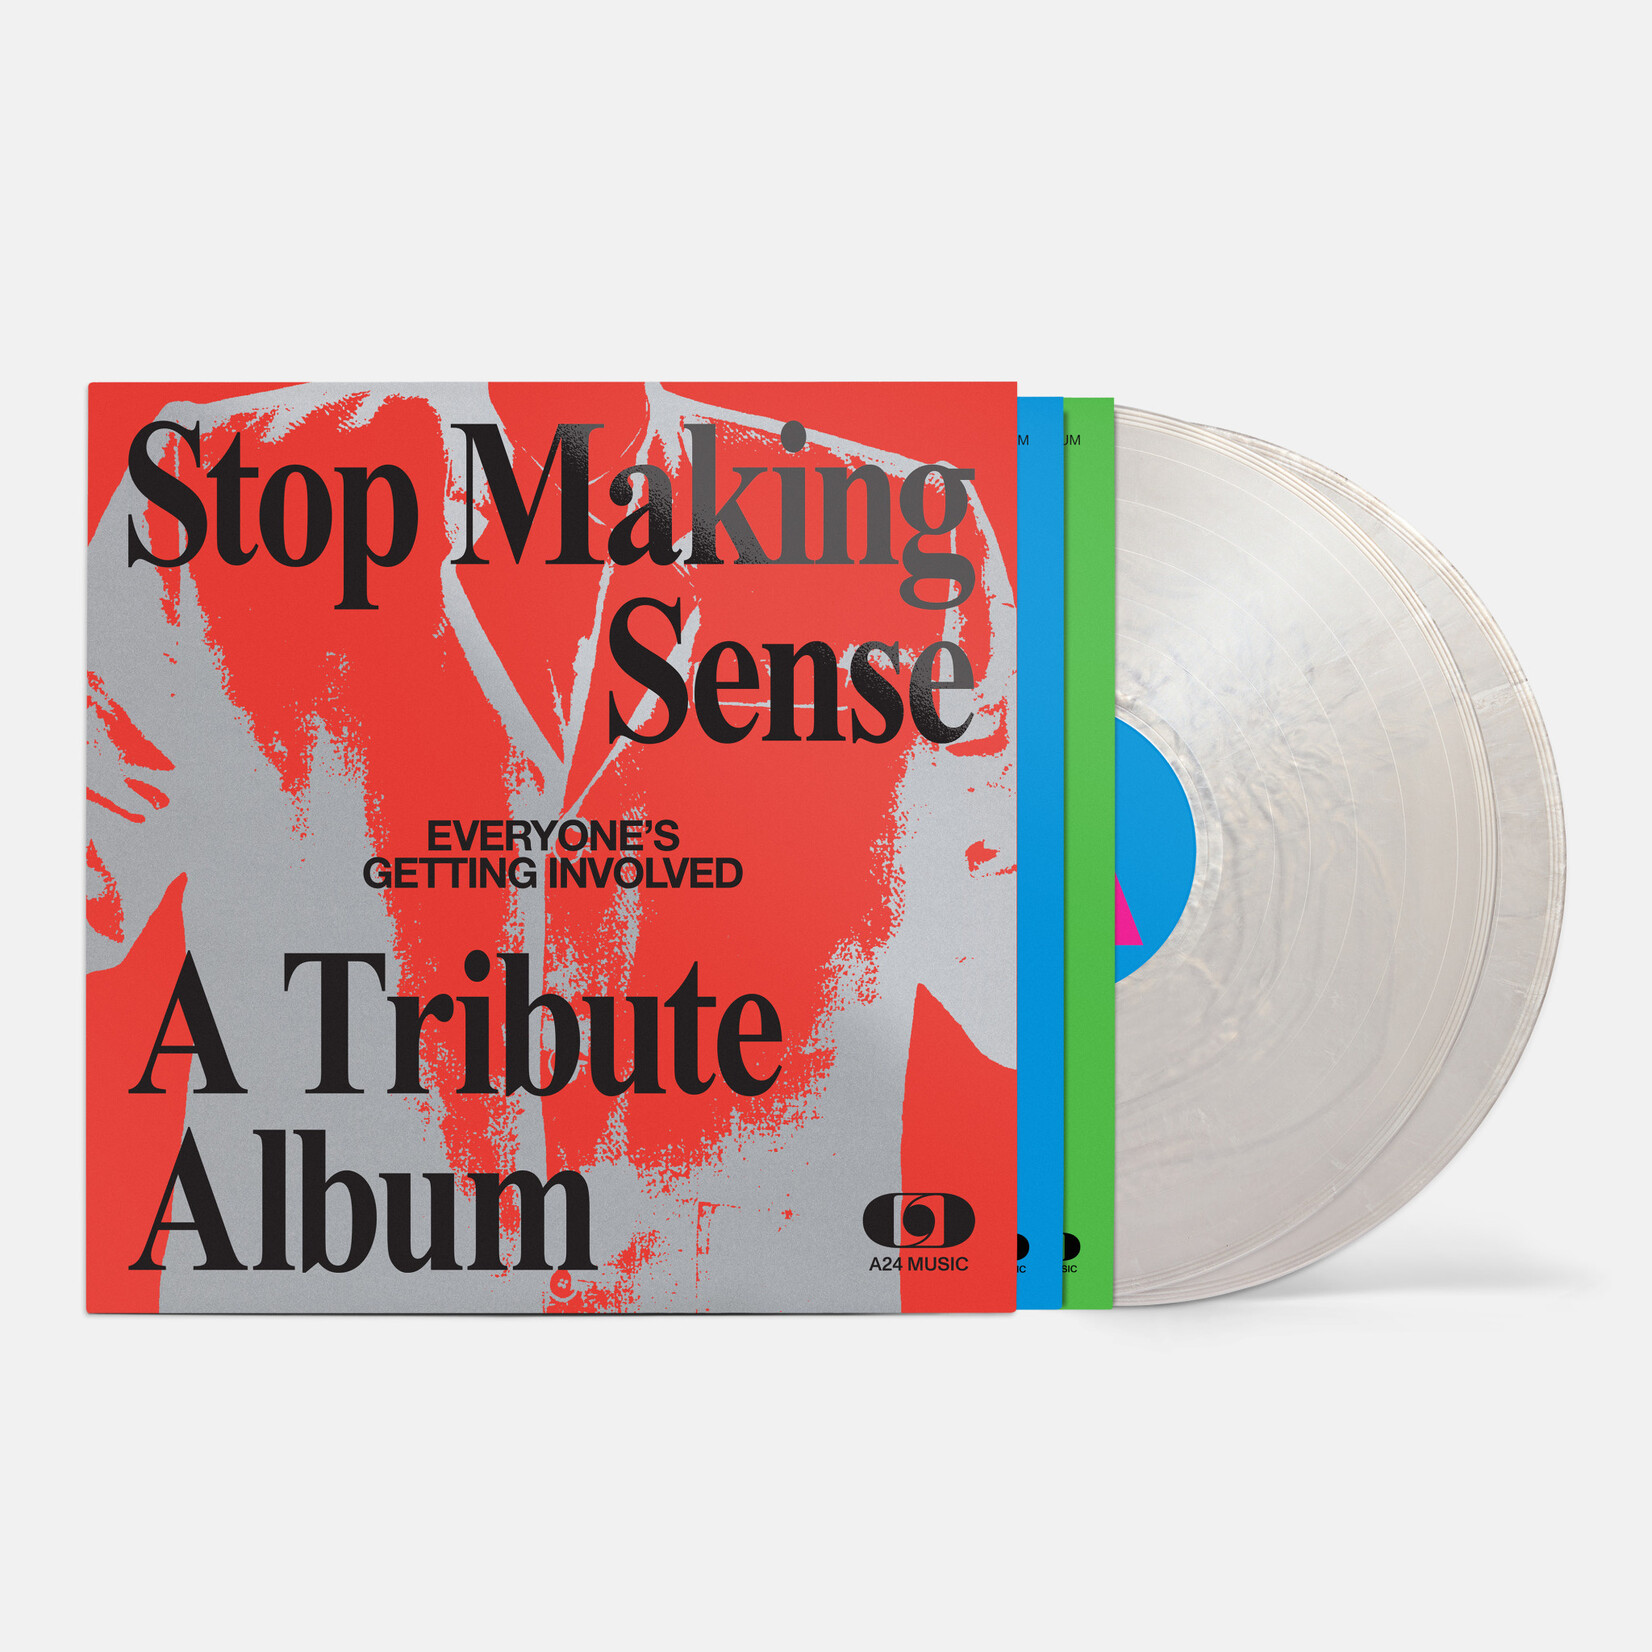 PRE-ORDER V/A - Everyone's Getting Involved: Stop Making Sense, A Tribute Album (2LP) [Silver]